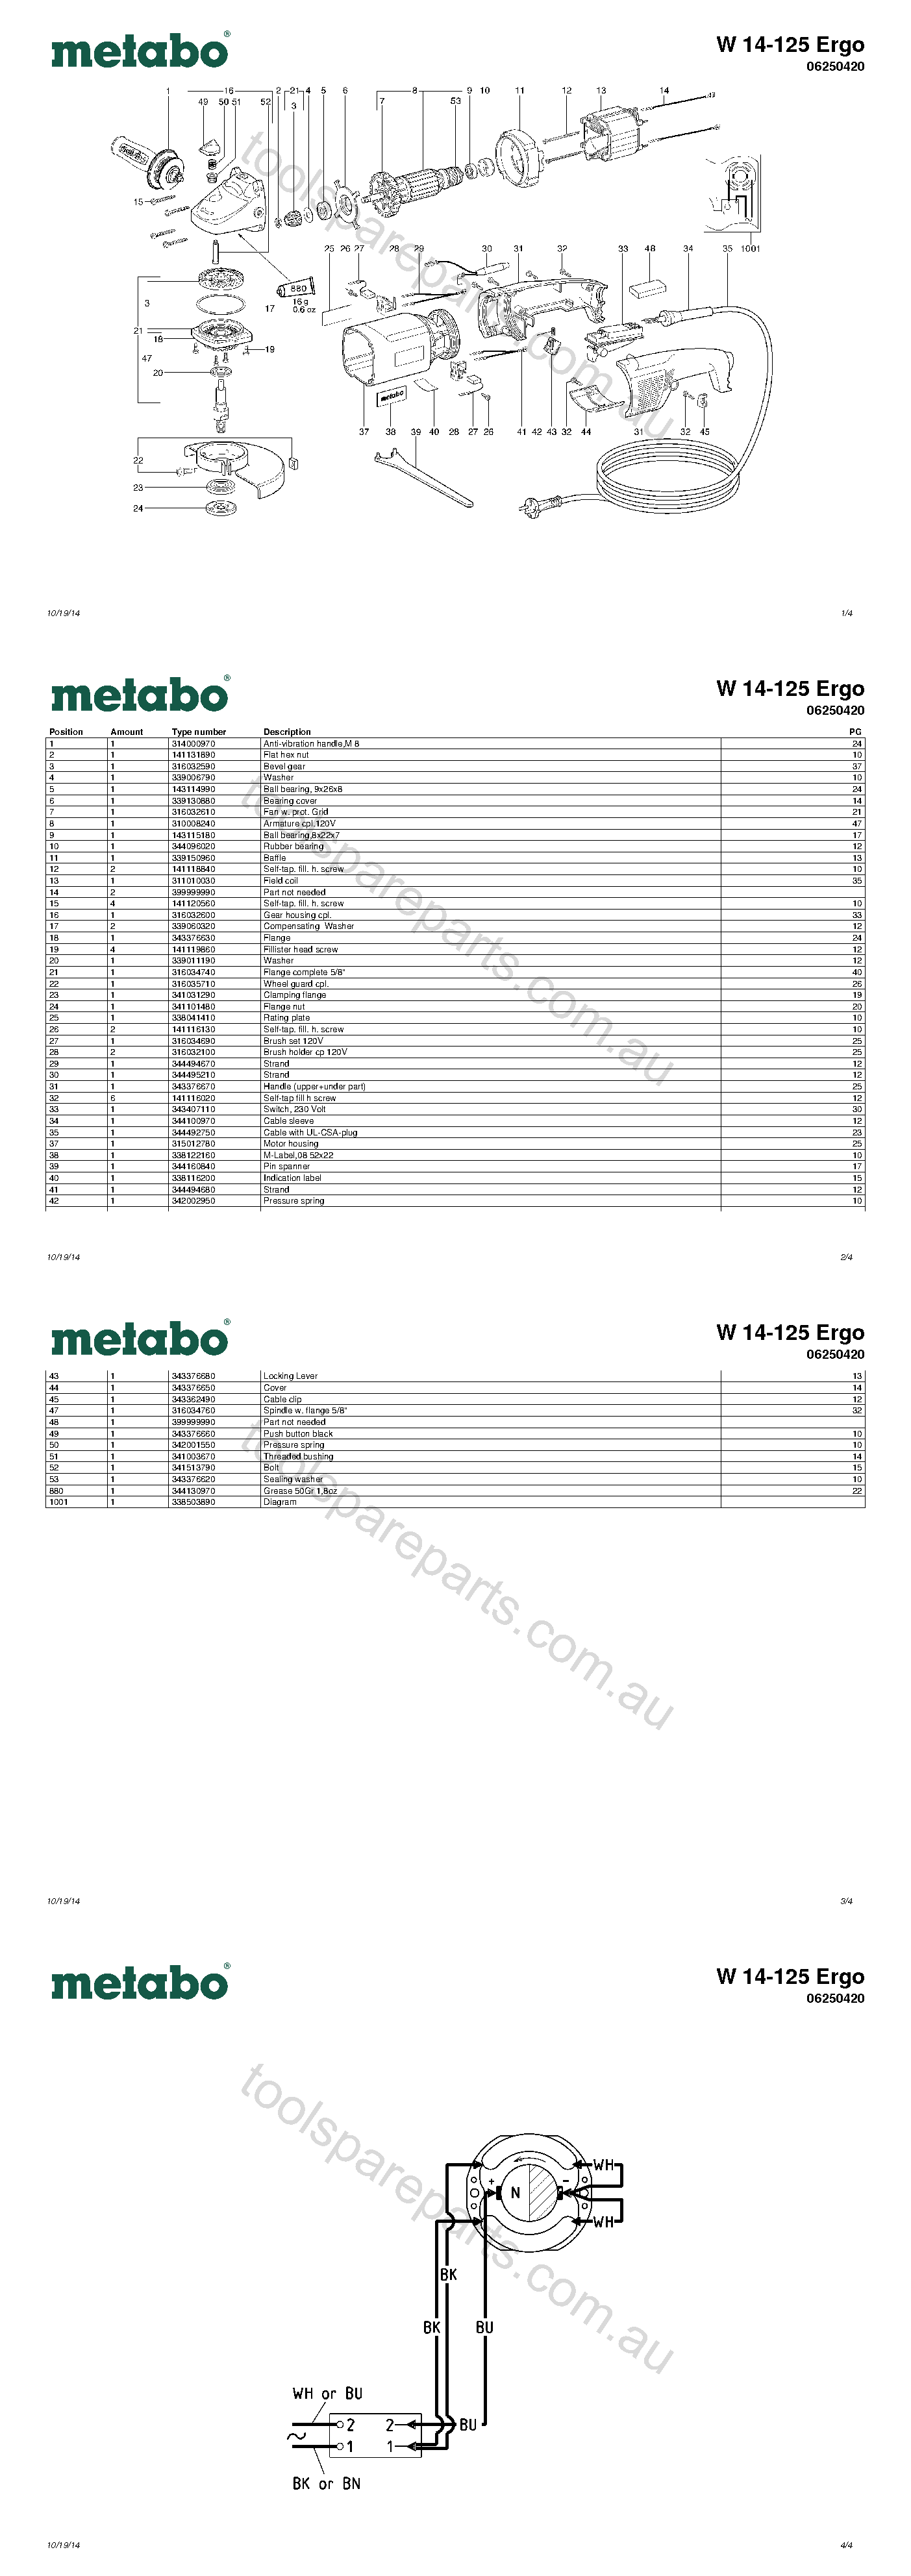 Metabo W 14-125 Ergo 06250420  Diagram 1